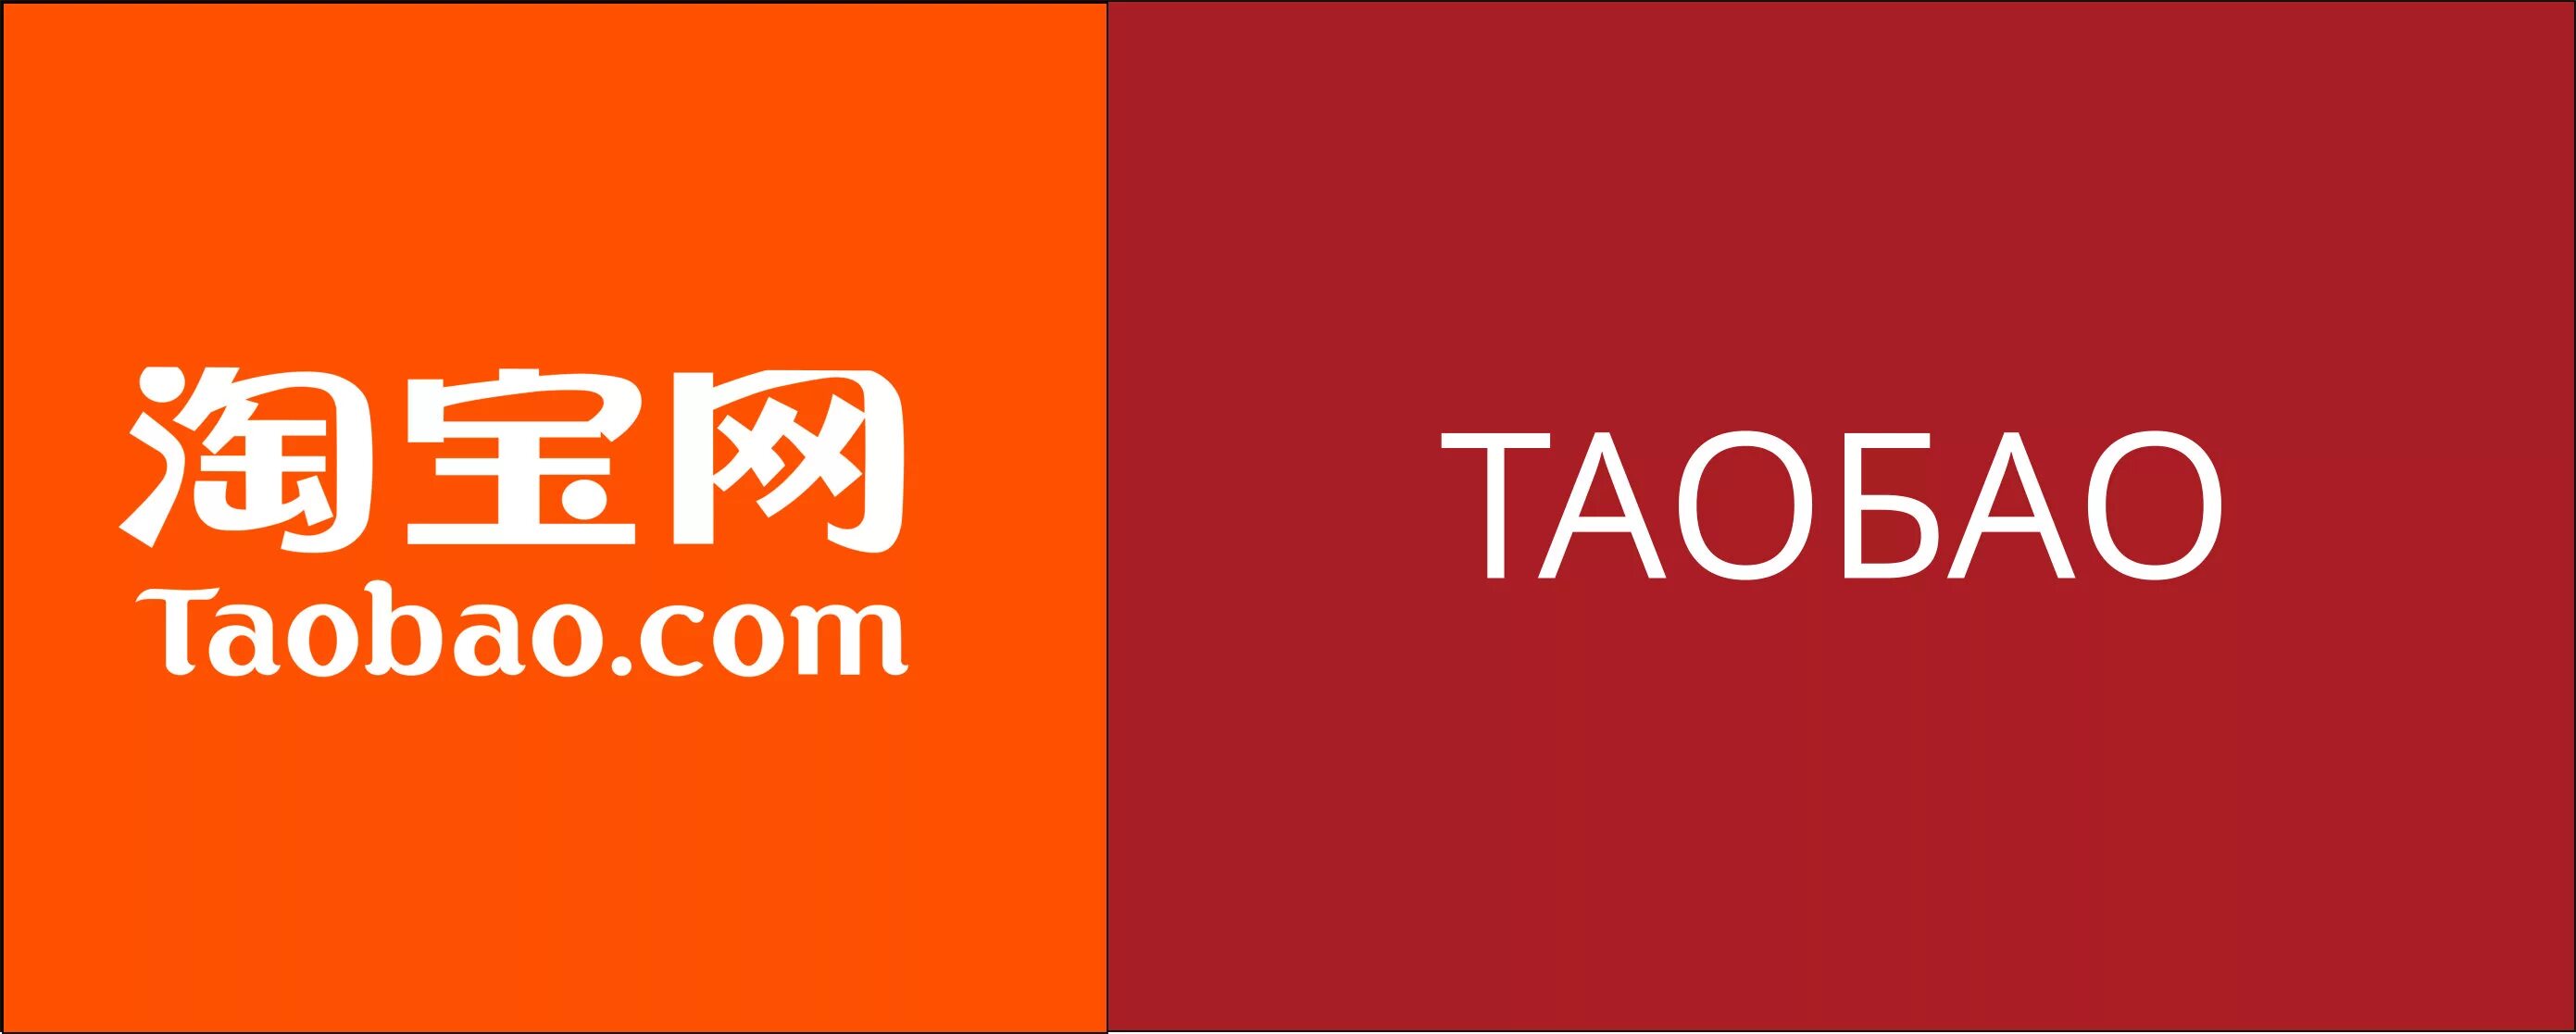 Таобао. Таобао логотип. Таобао 1688. Таобао.com. Табао ру на русском